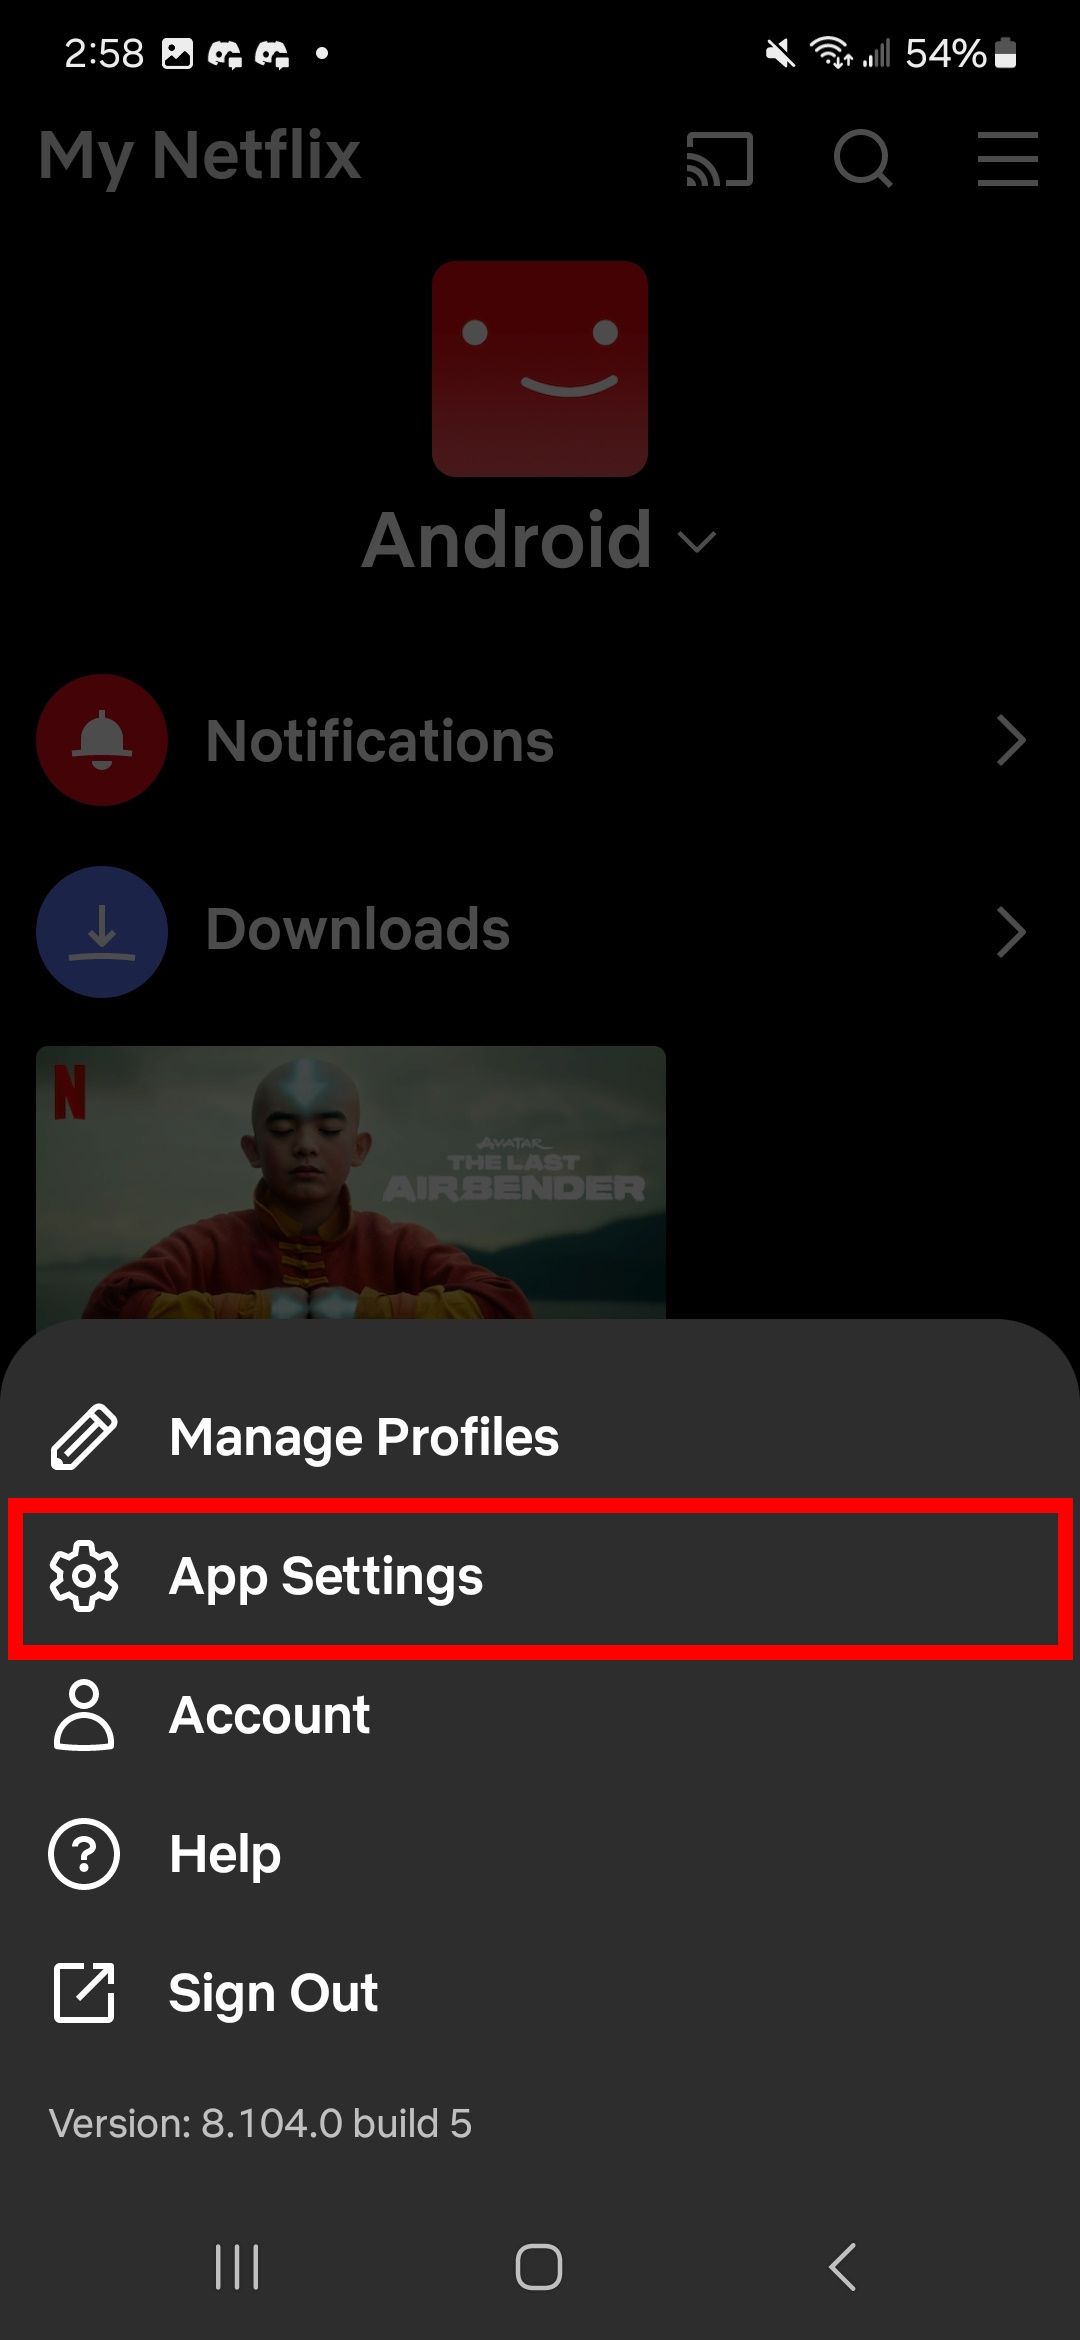 red rectangle outline over app settings in netflix app